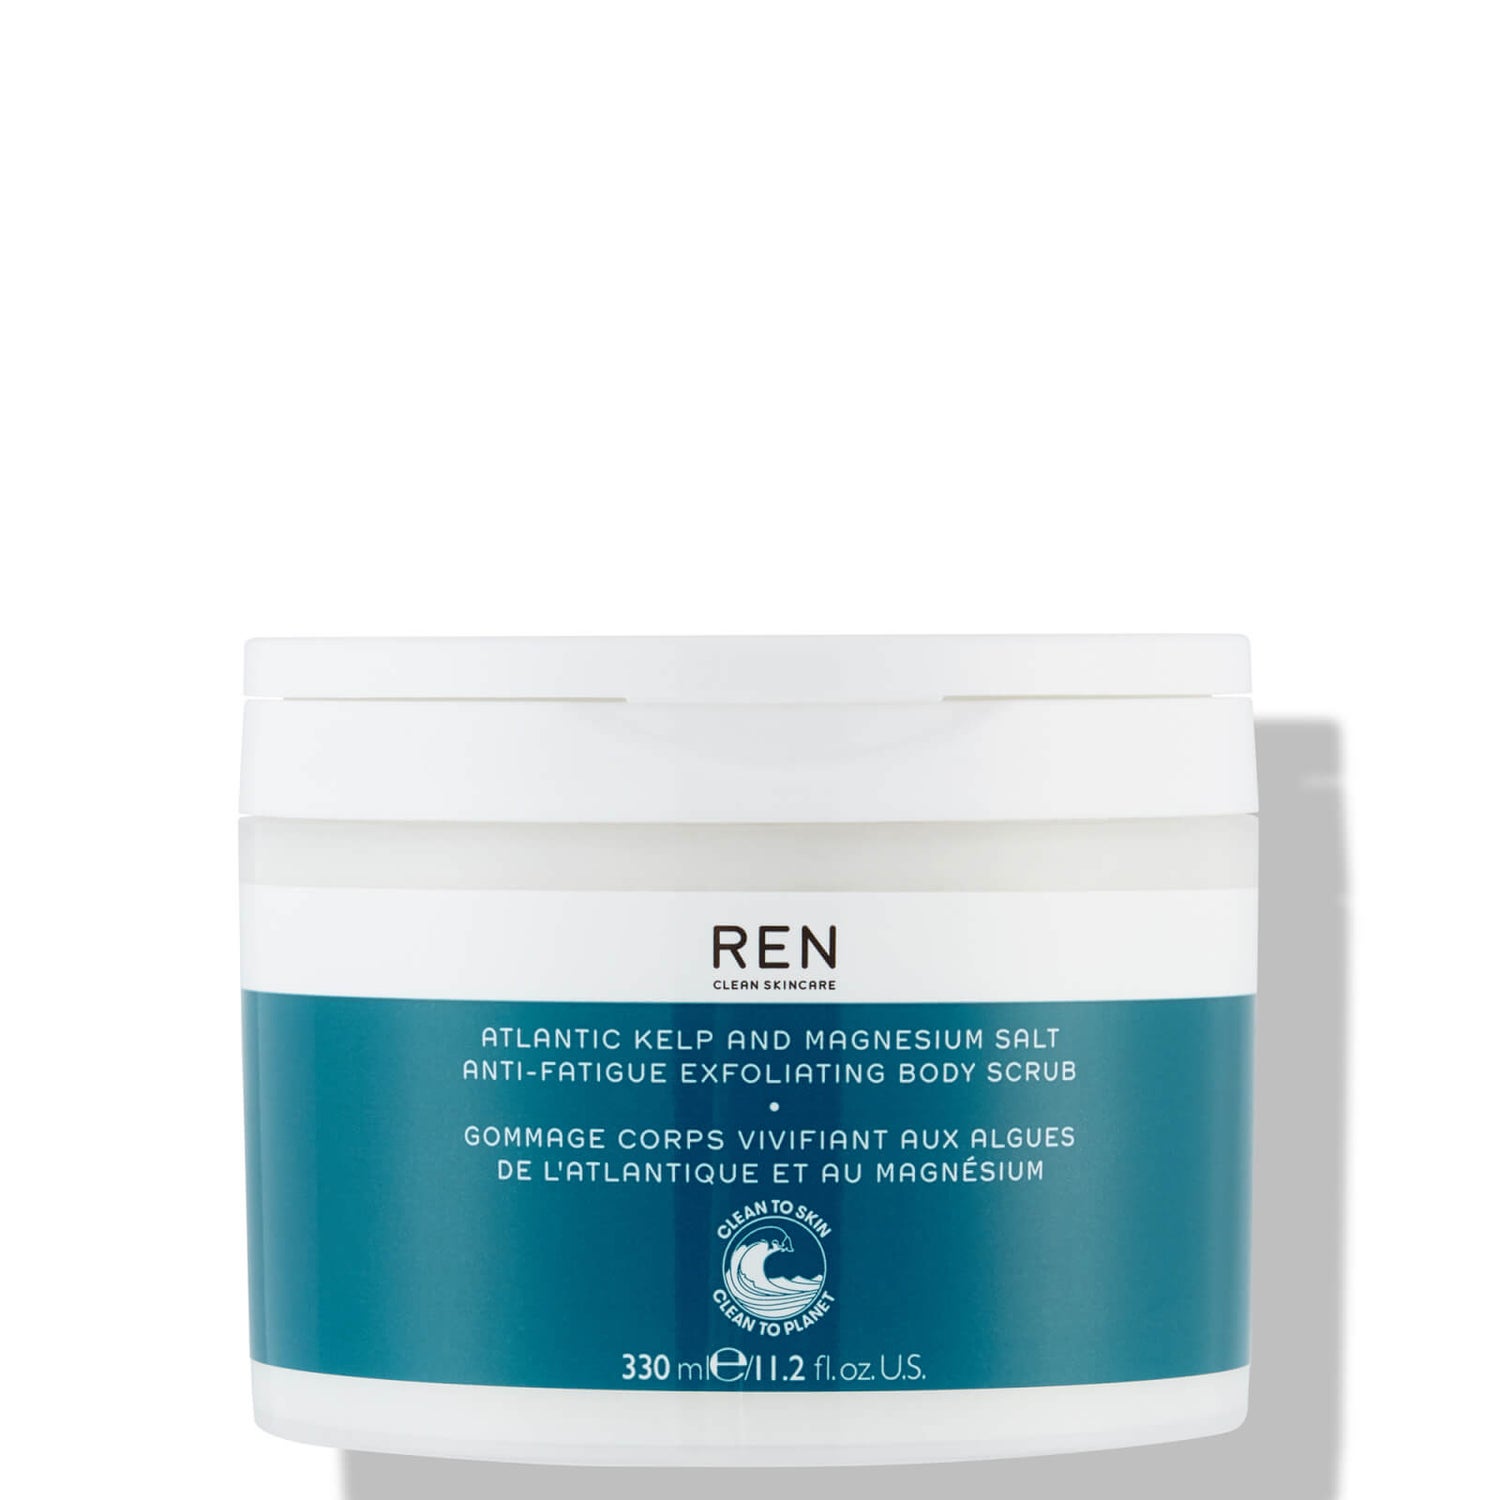 REN Clean Skincare Skincare Atlantic Kelp and Magnesium Salt Anti-Fatigue Exfoliating Body Scrub 330ml